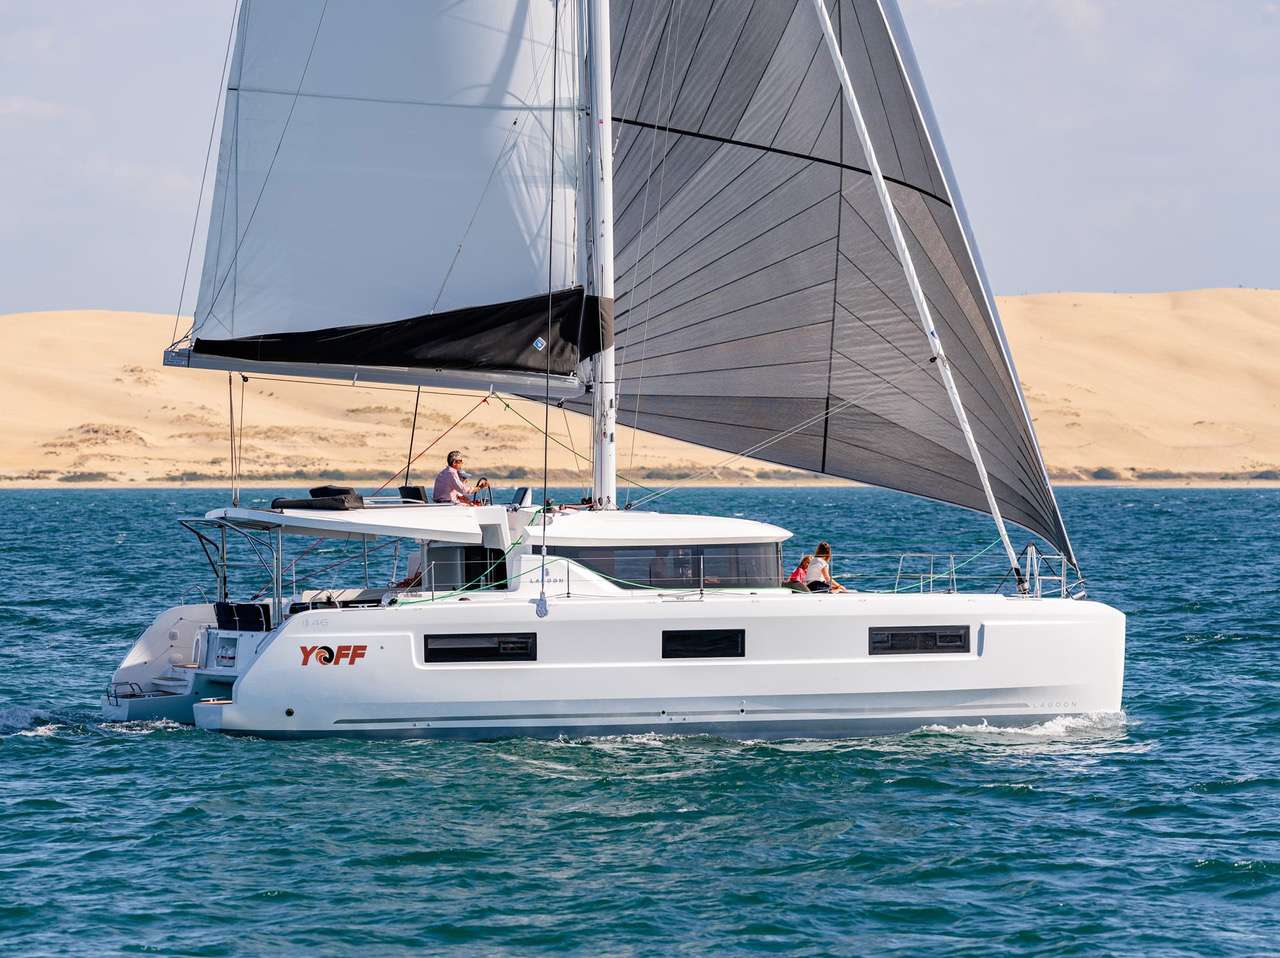 YOFF - Yacht Charter Cogolin & Boat hire in Fr. Riviera, Corsica & Sardinia 1